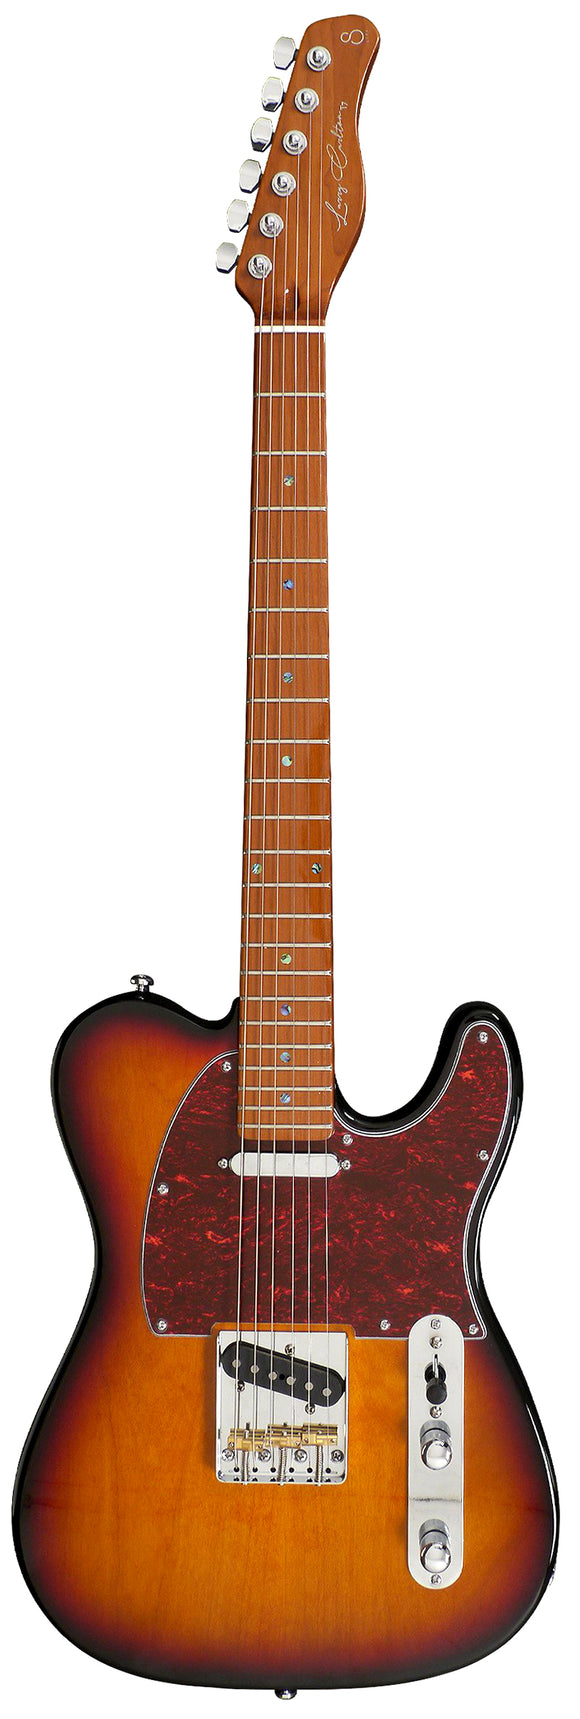 Sire T7 Larry Carlton Electric Guitar, Tobacco Sunburst